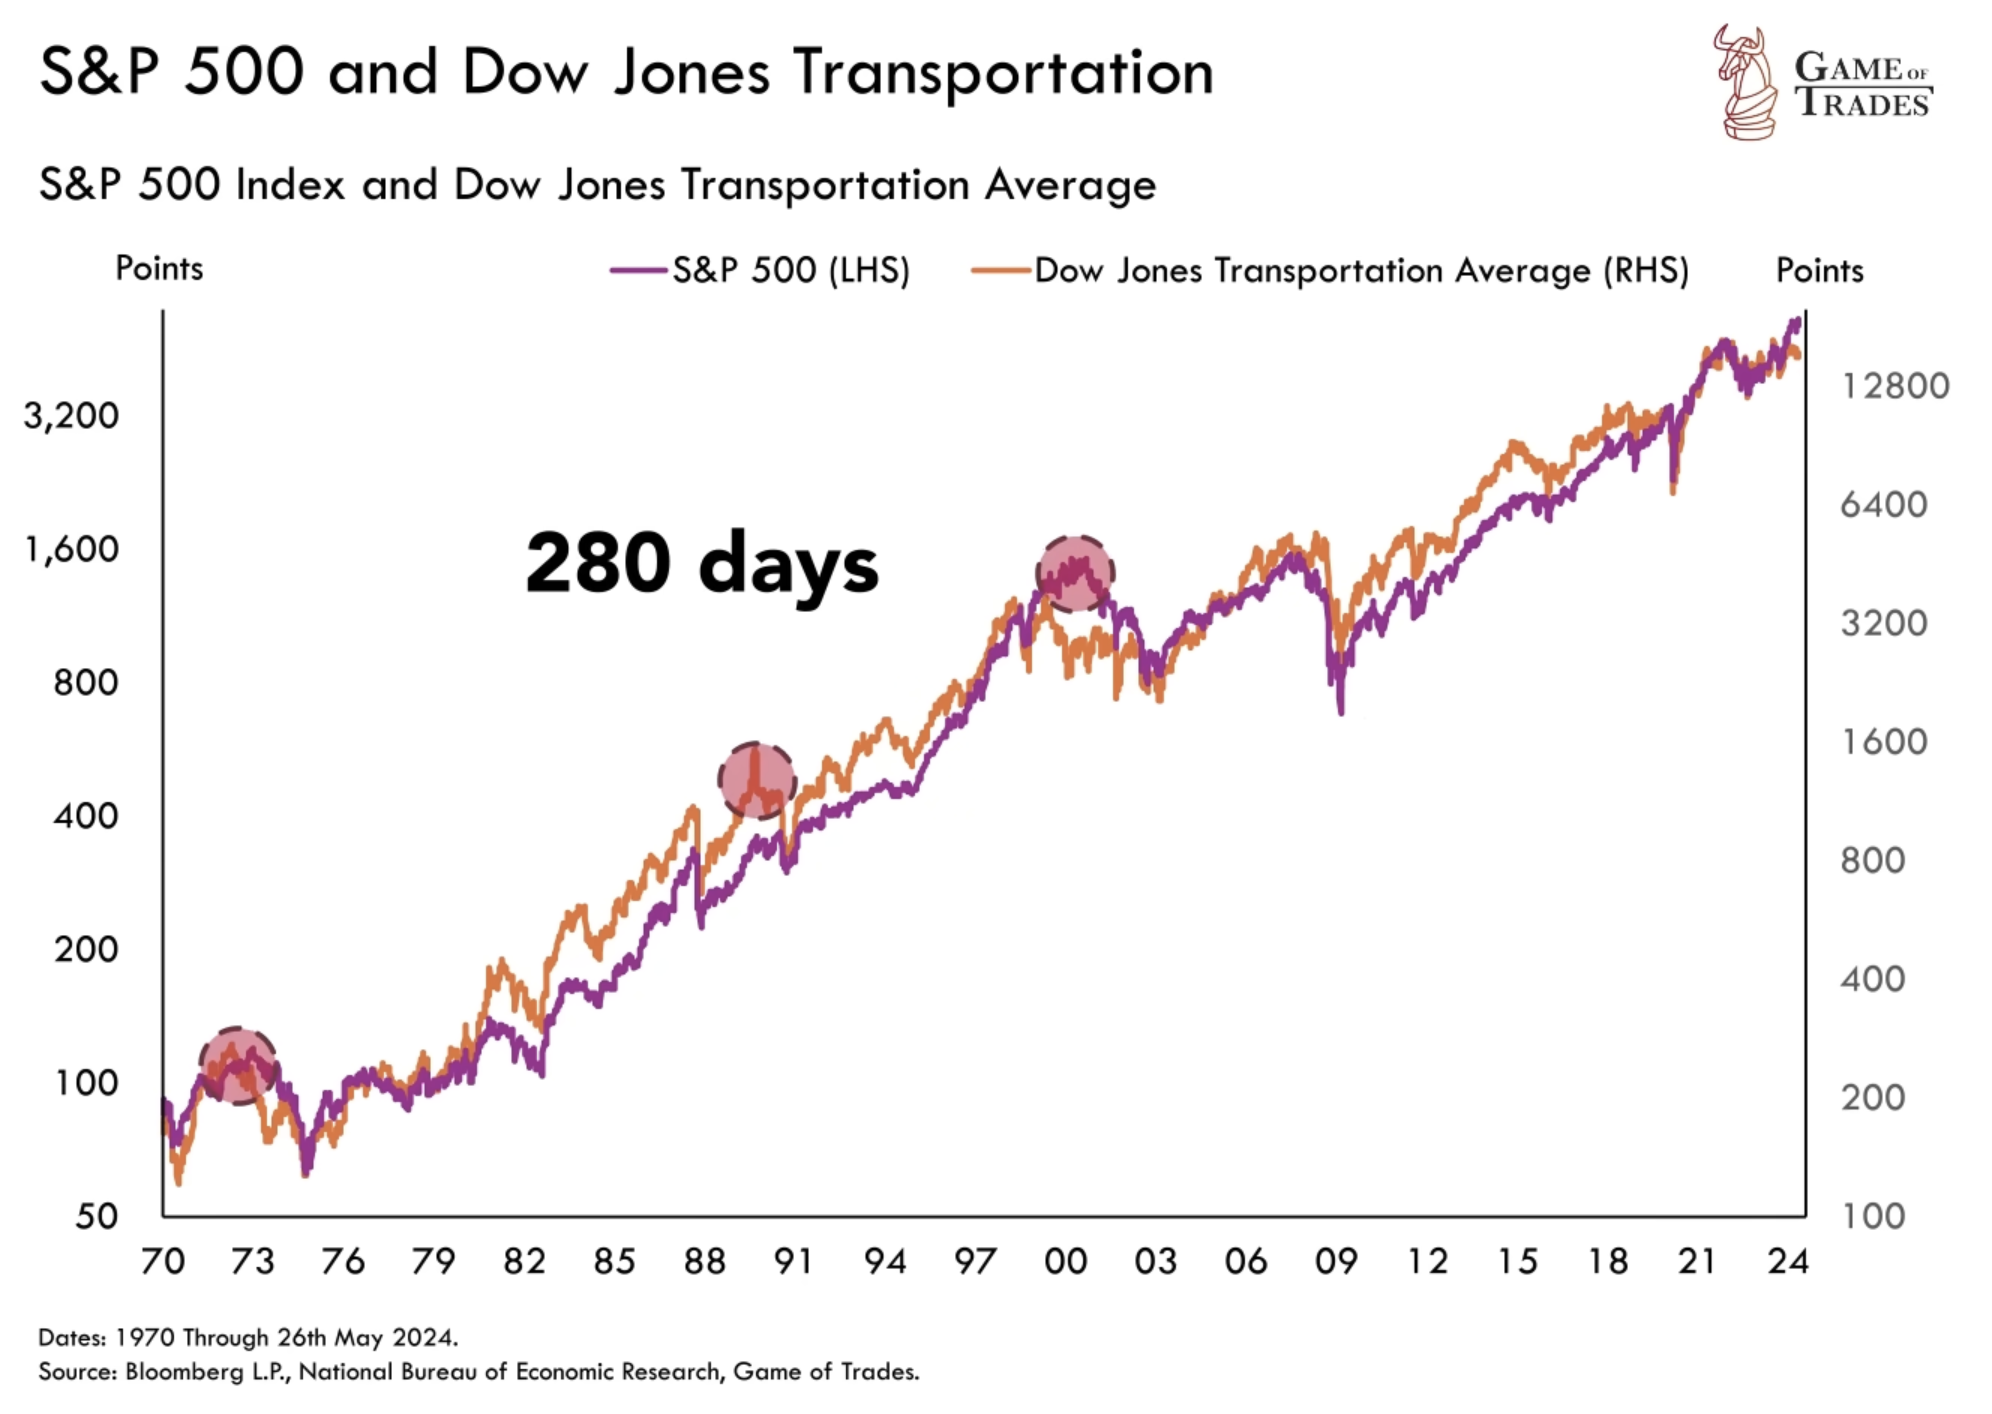 Dow Jones Transportation